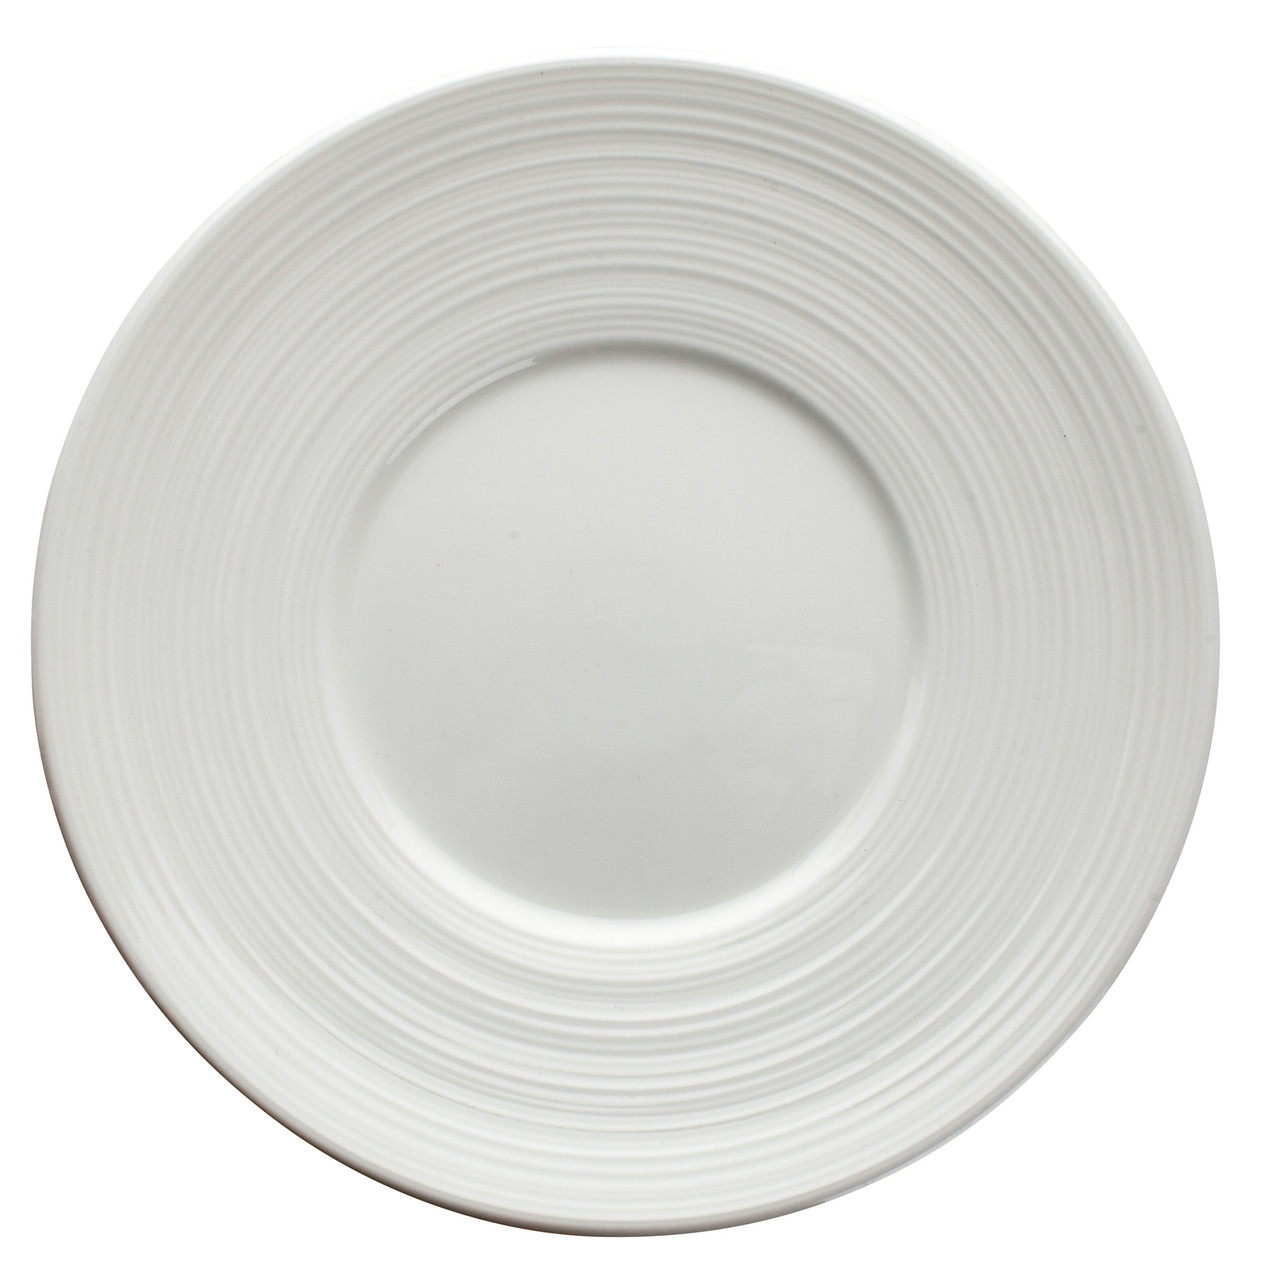 Winco ZENDO 6-1/2"Dia. Porcelain Round Plate, Bright White, 48 pcs